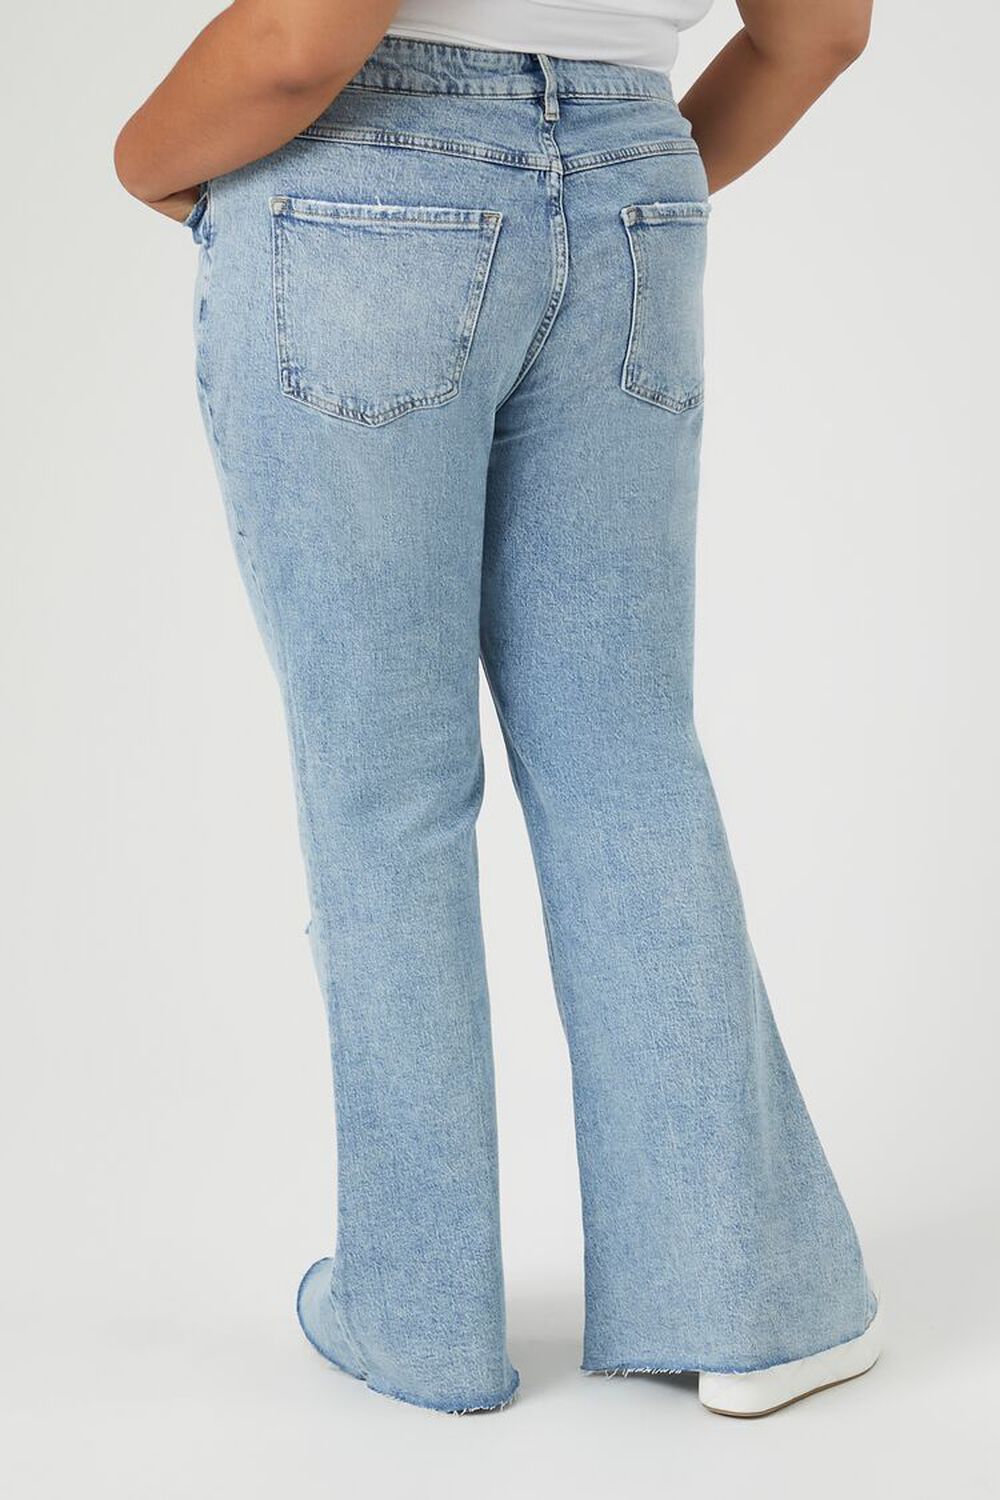 LIGHT DENIM Plus Size Stretch-Denim Flare Jeans, image 3